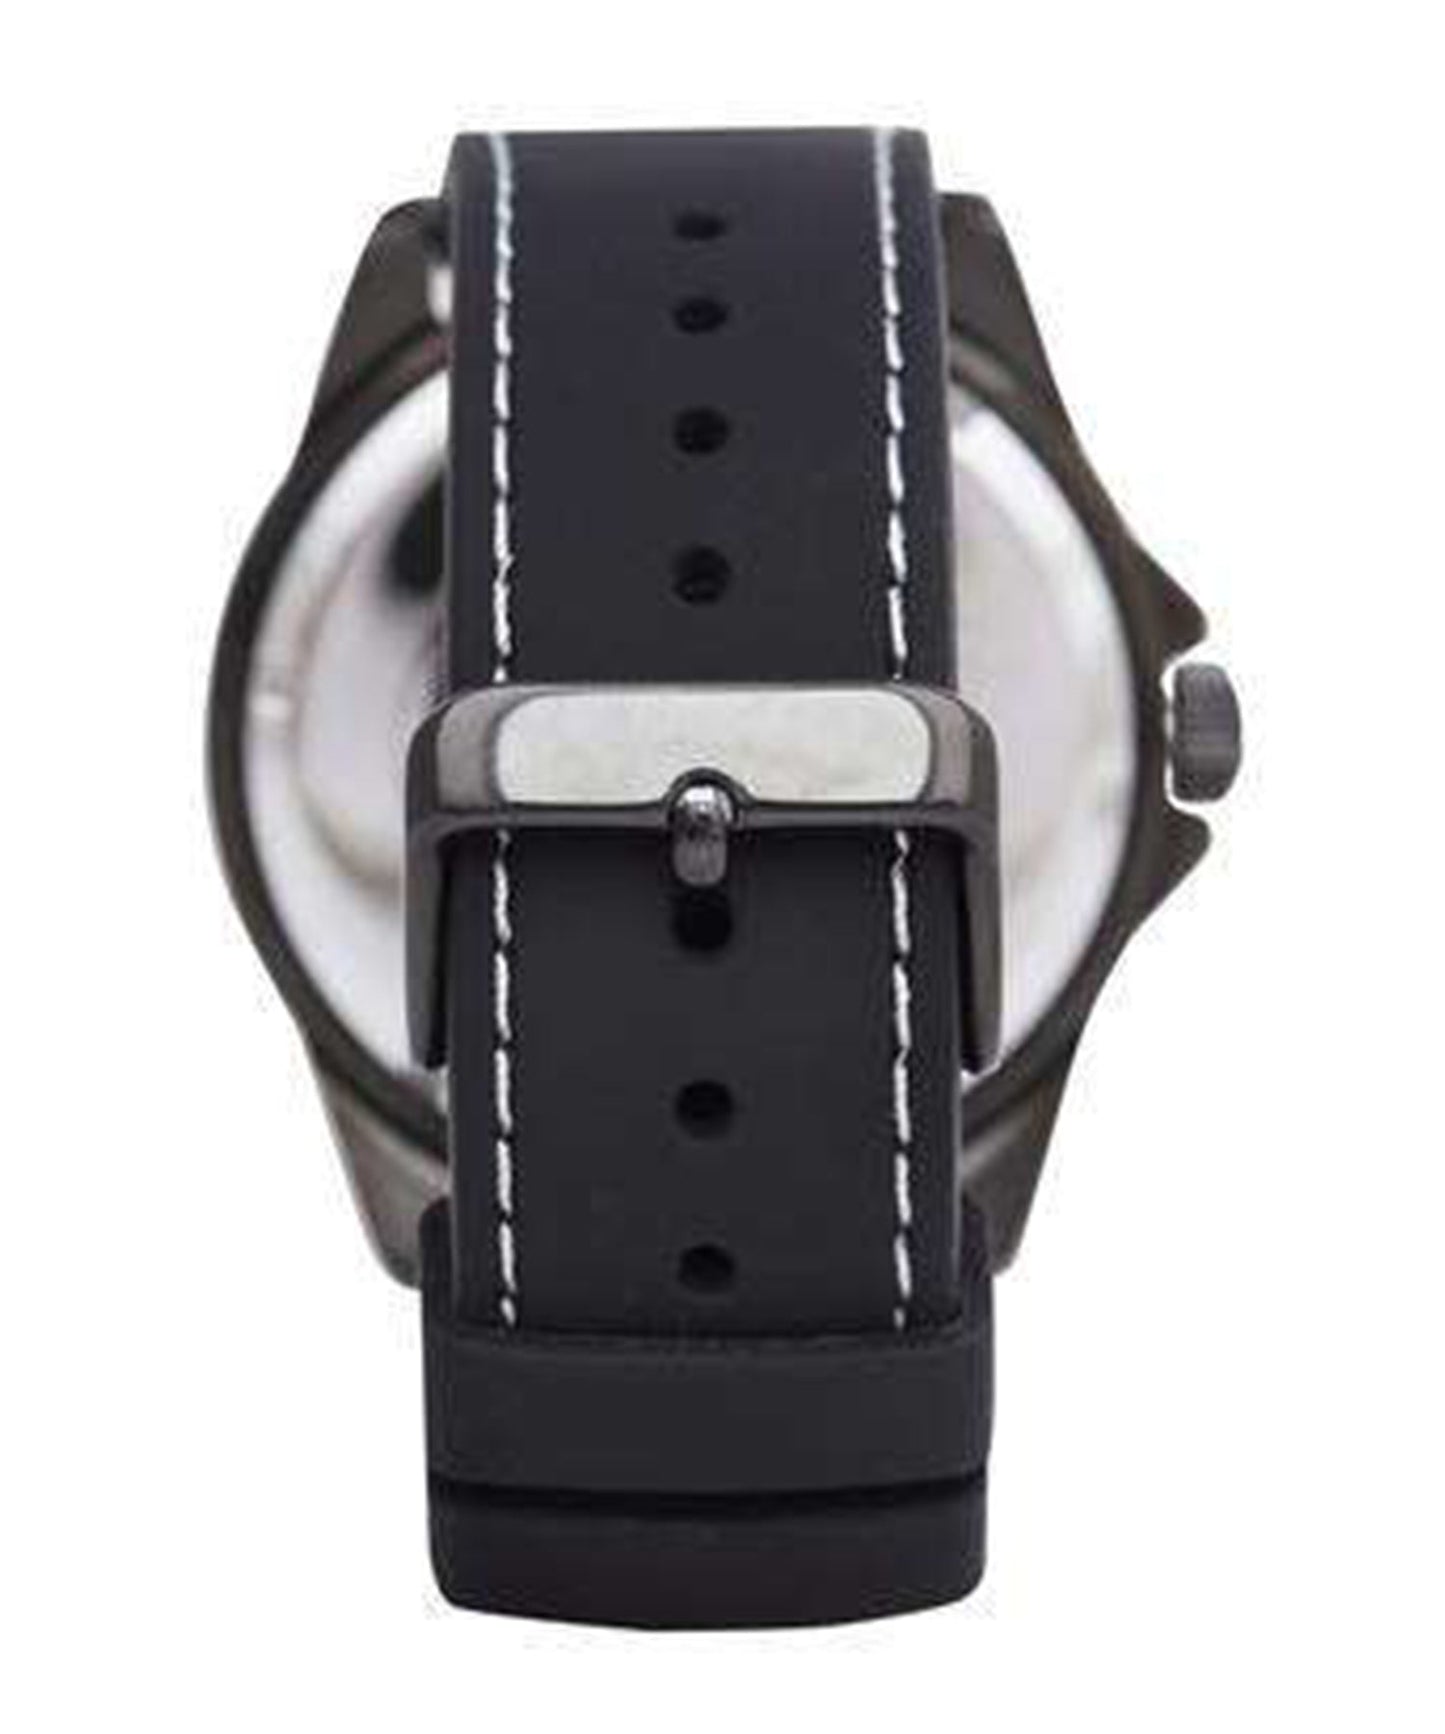 Guess Odyssey Quartz Black Dial Men's Watch W1108G3